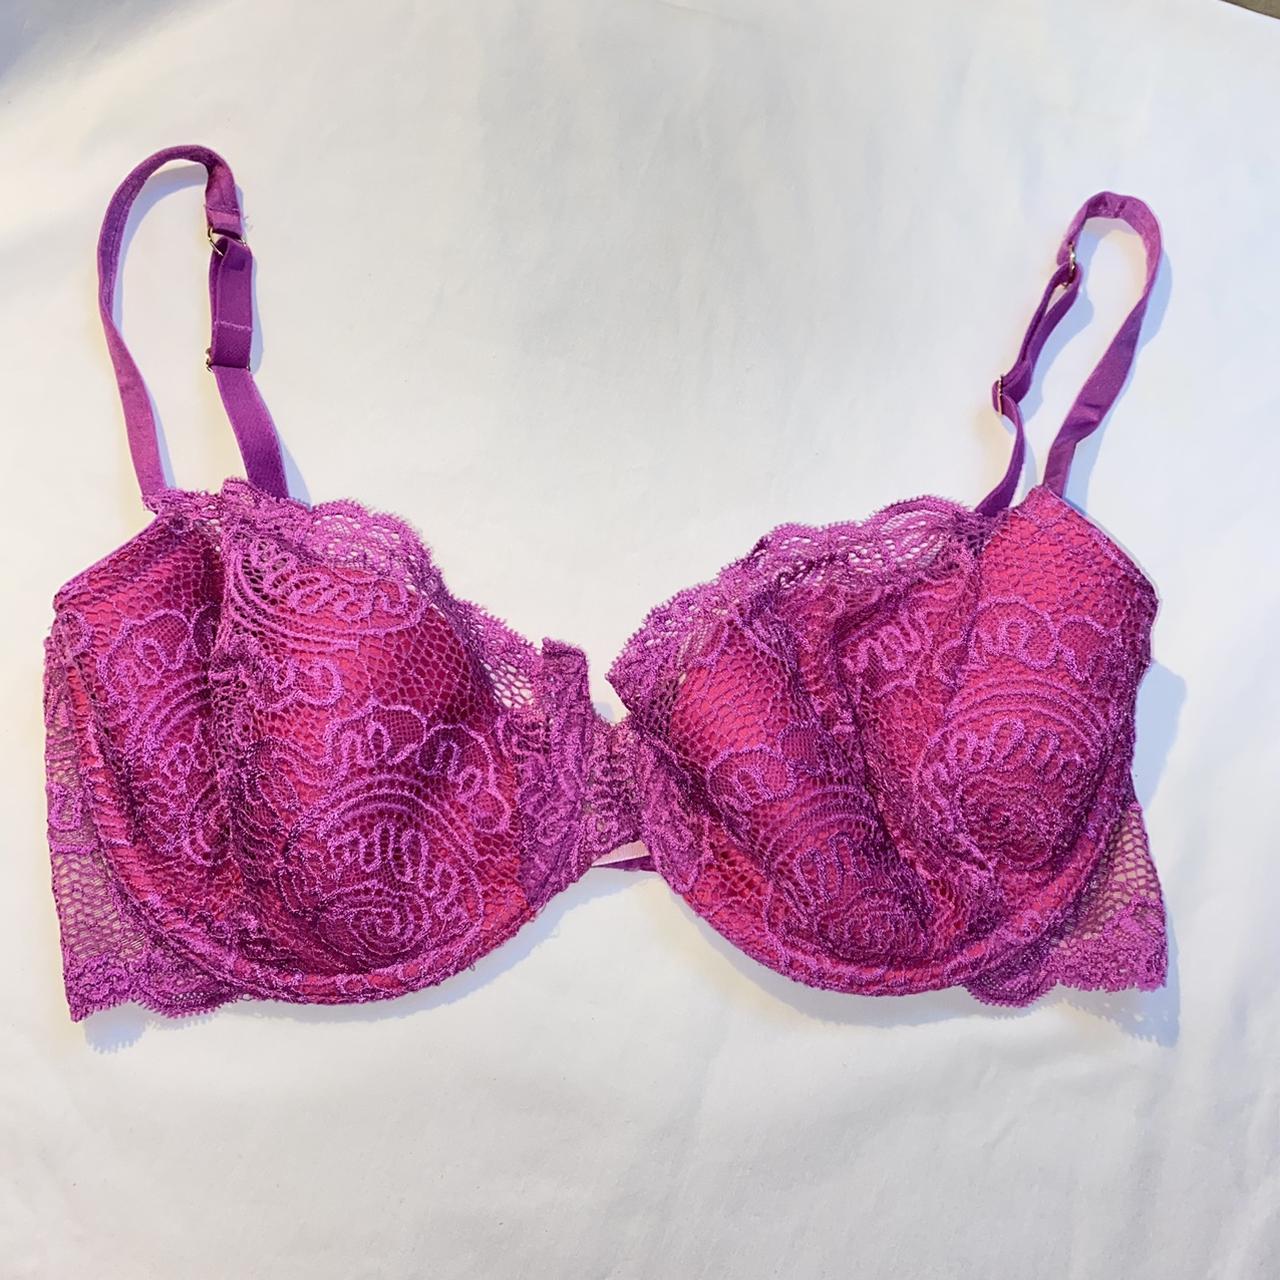 Pink bra size 38D